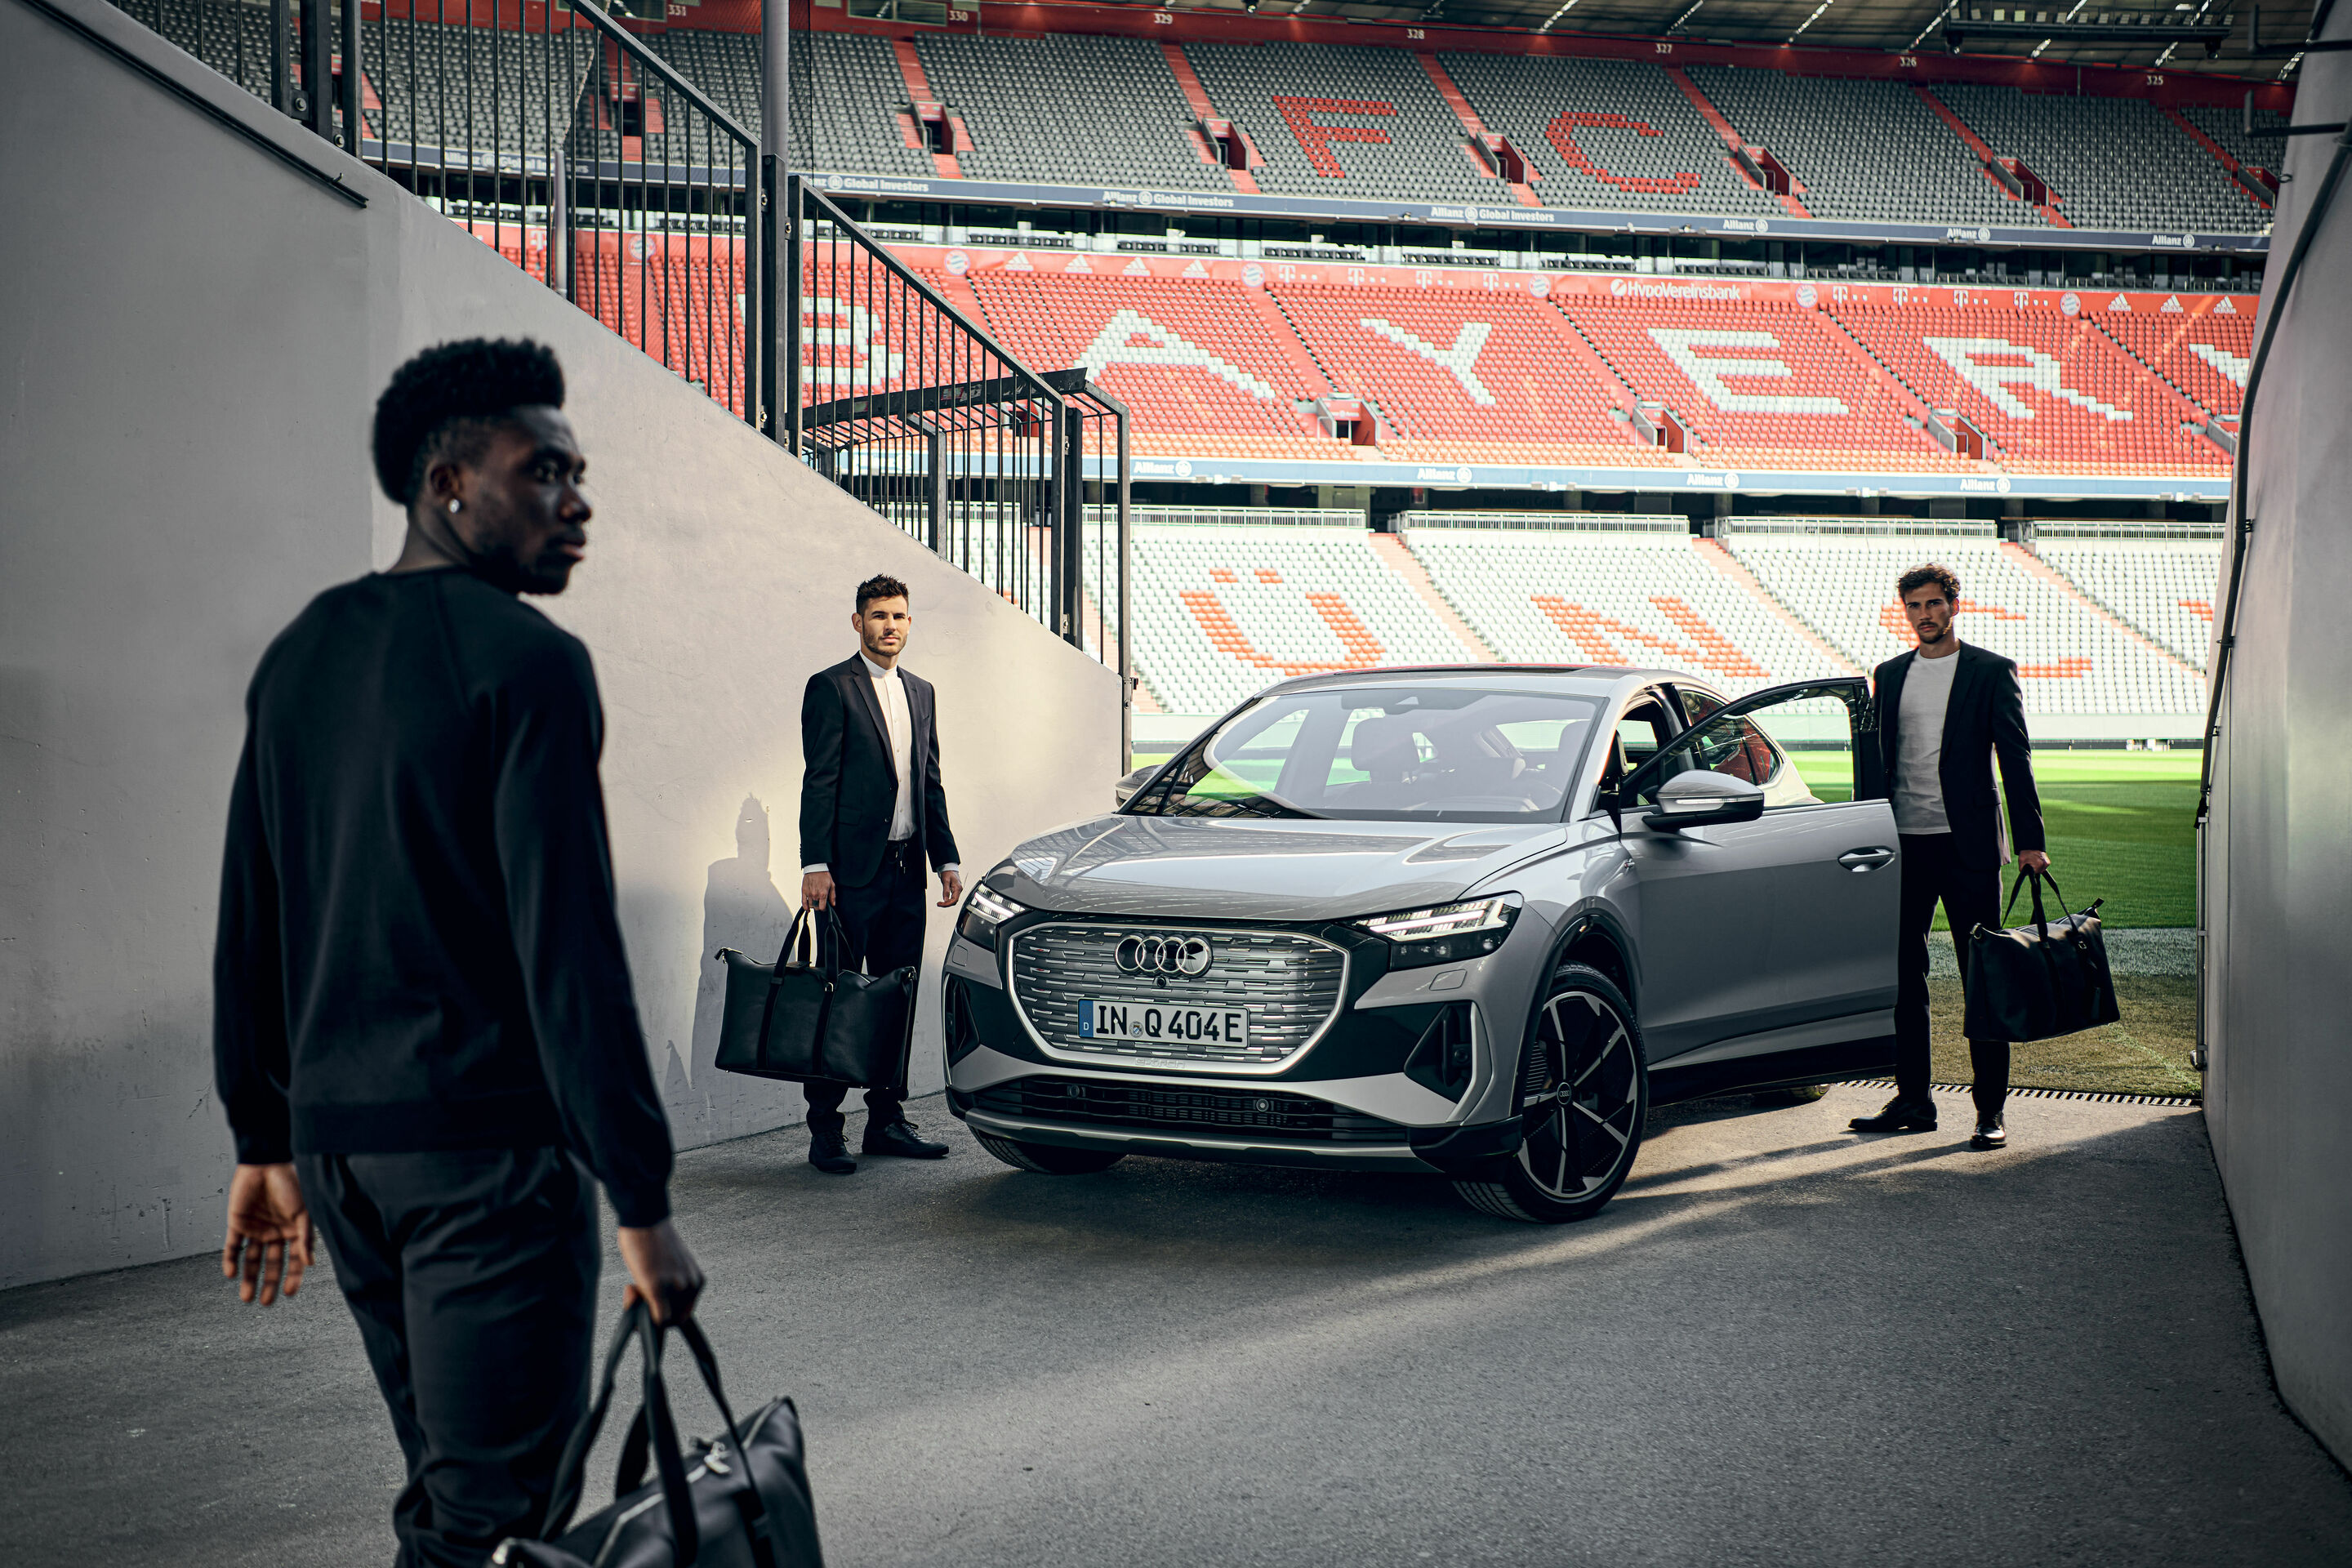 Audi Summer Tour 2021: Digital season kick-off with FC Bayern soccer stars